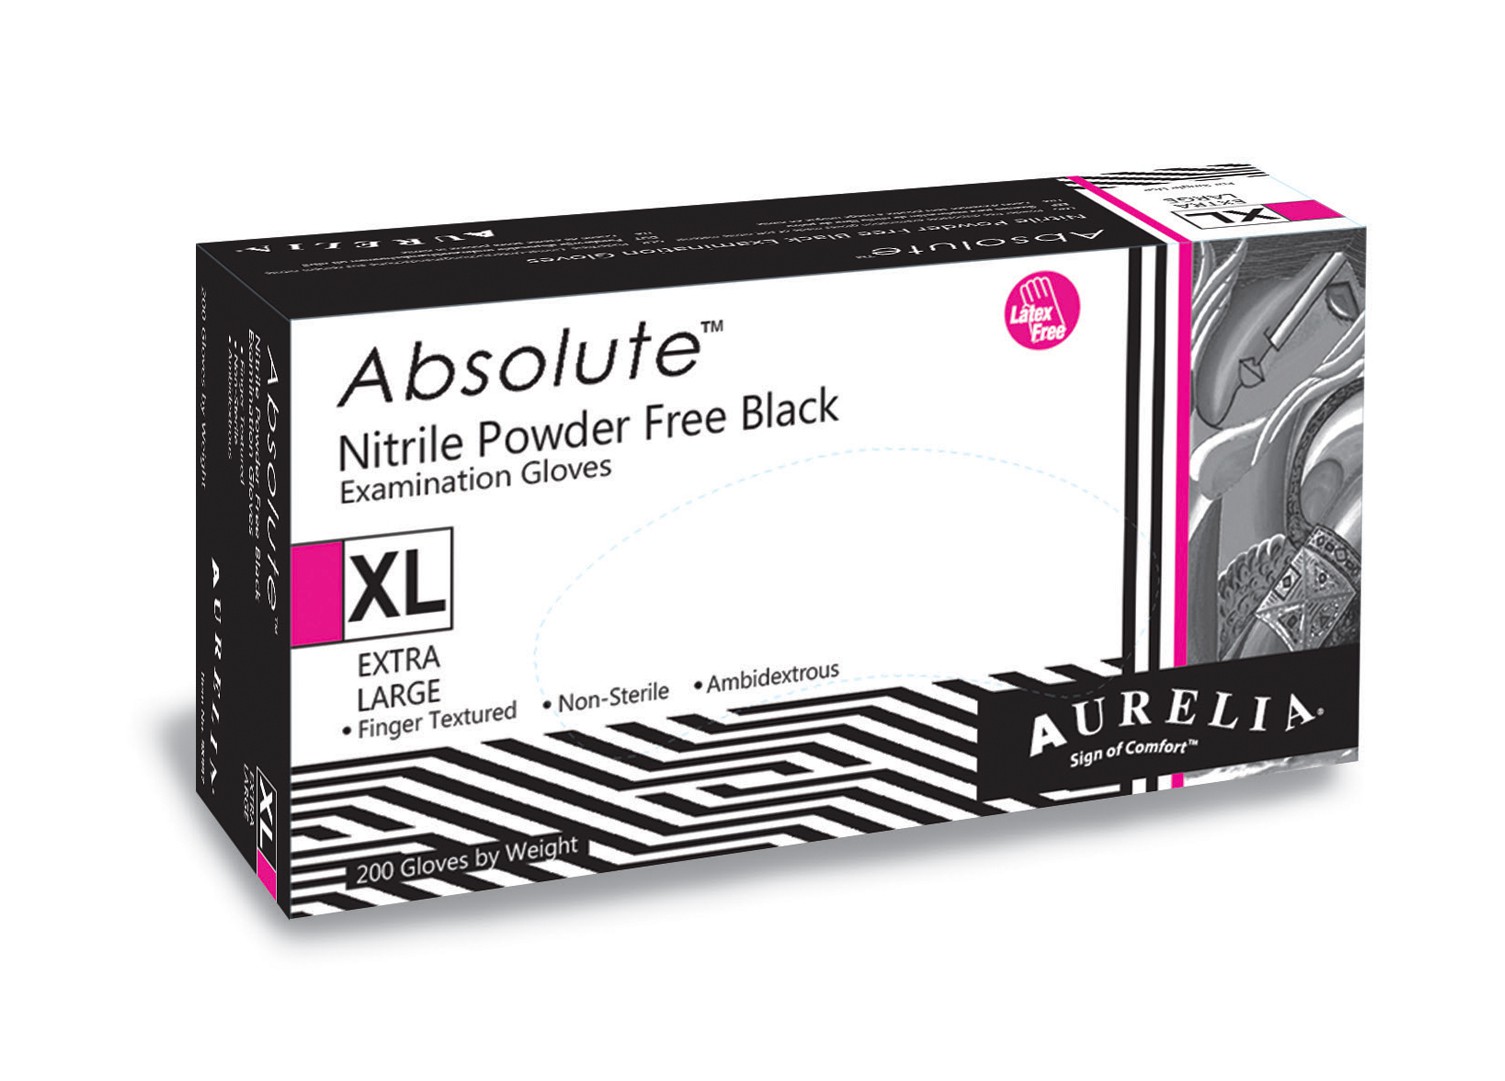 Aurelia+Absolute+Black+Nitrile+Examination+Gloves+Medium+